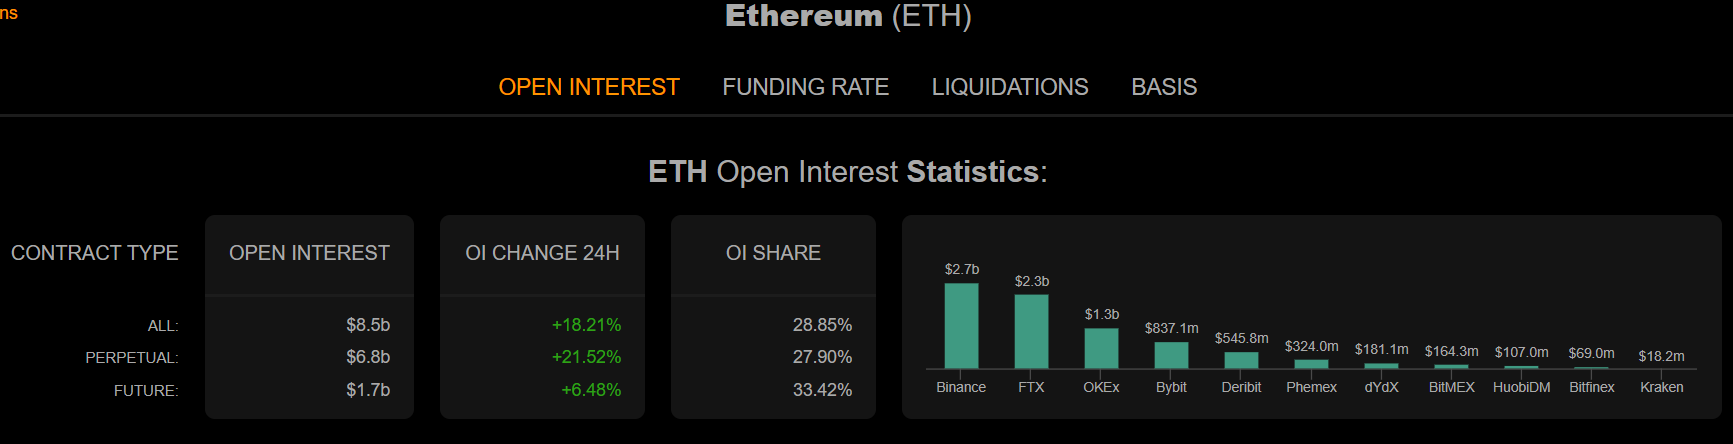 Ethereum (ETH) open interest statistics